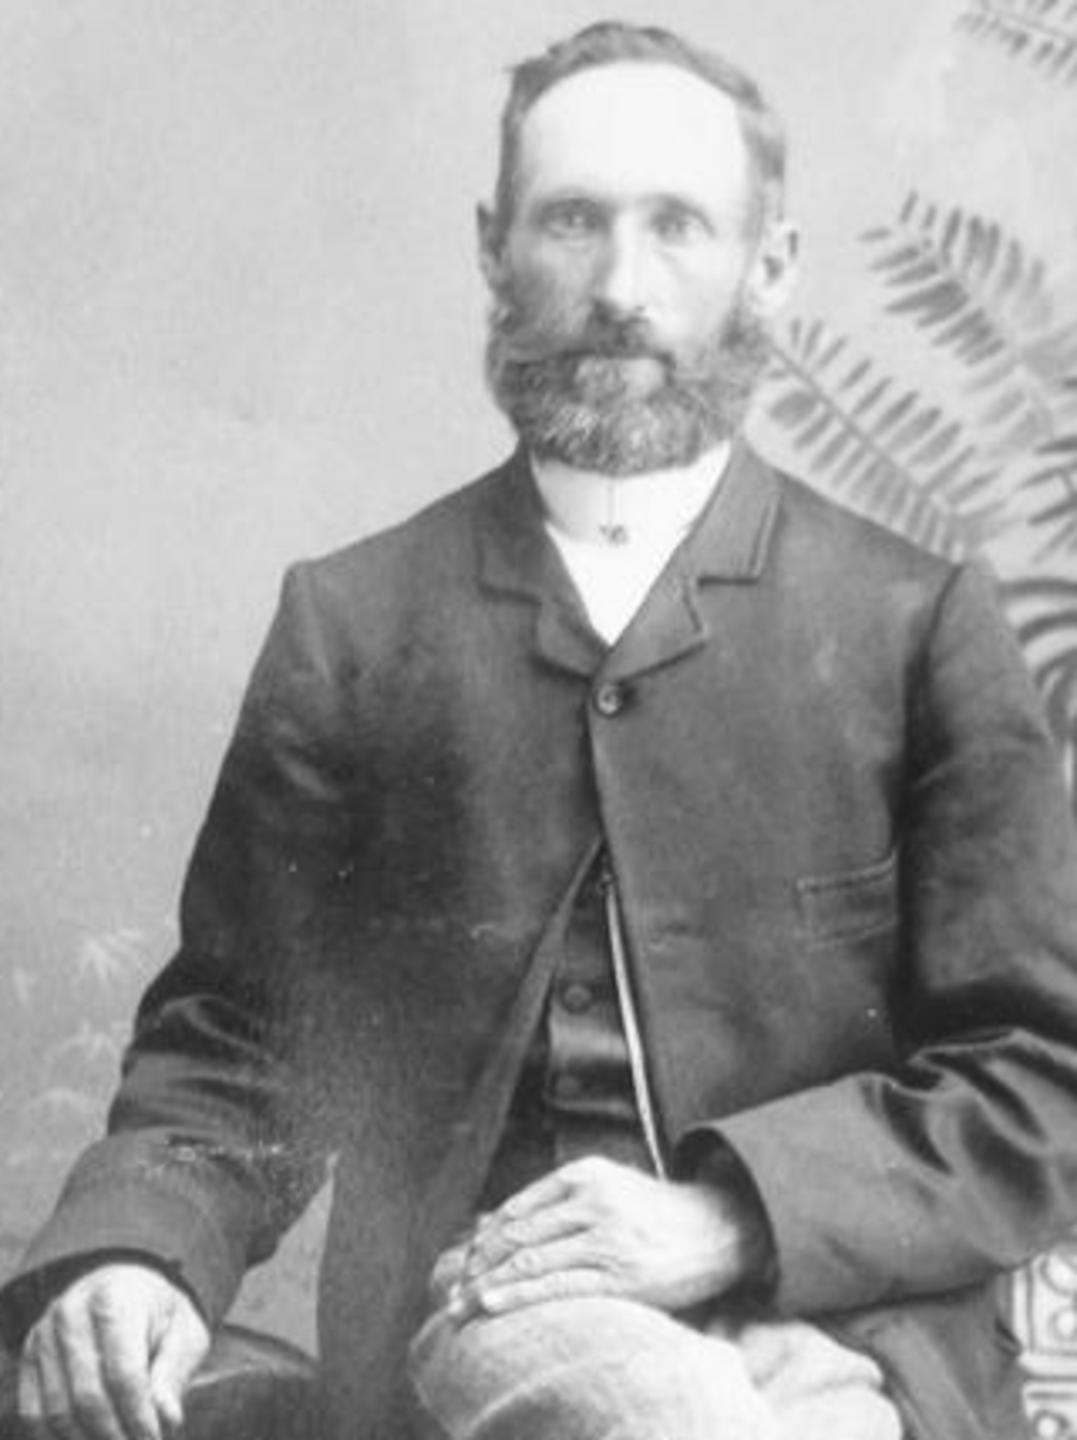 Joseph Mahonri Tippets (1838 - 1910)